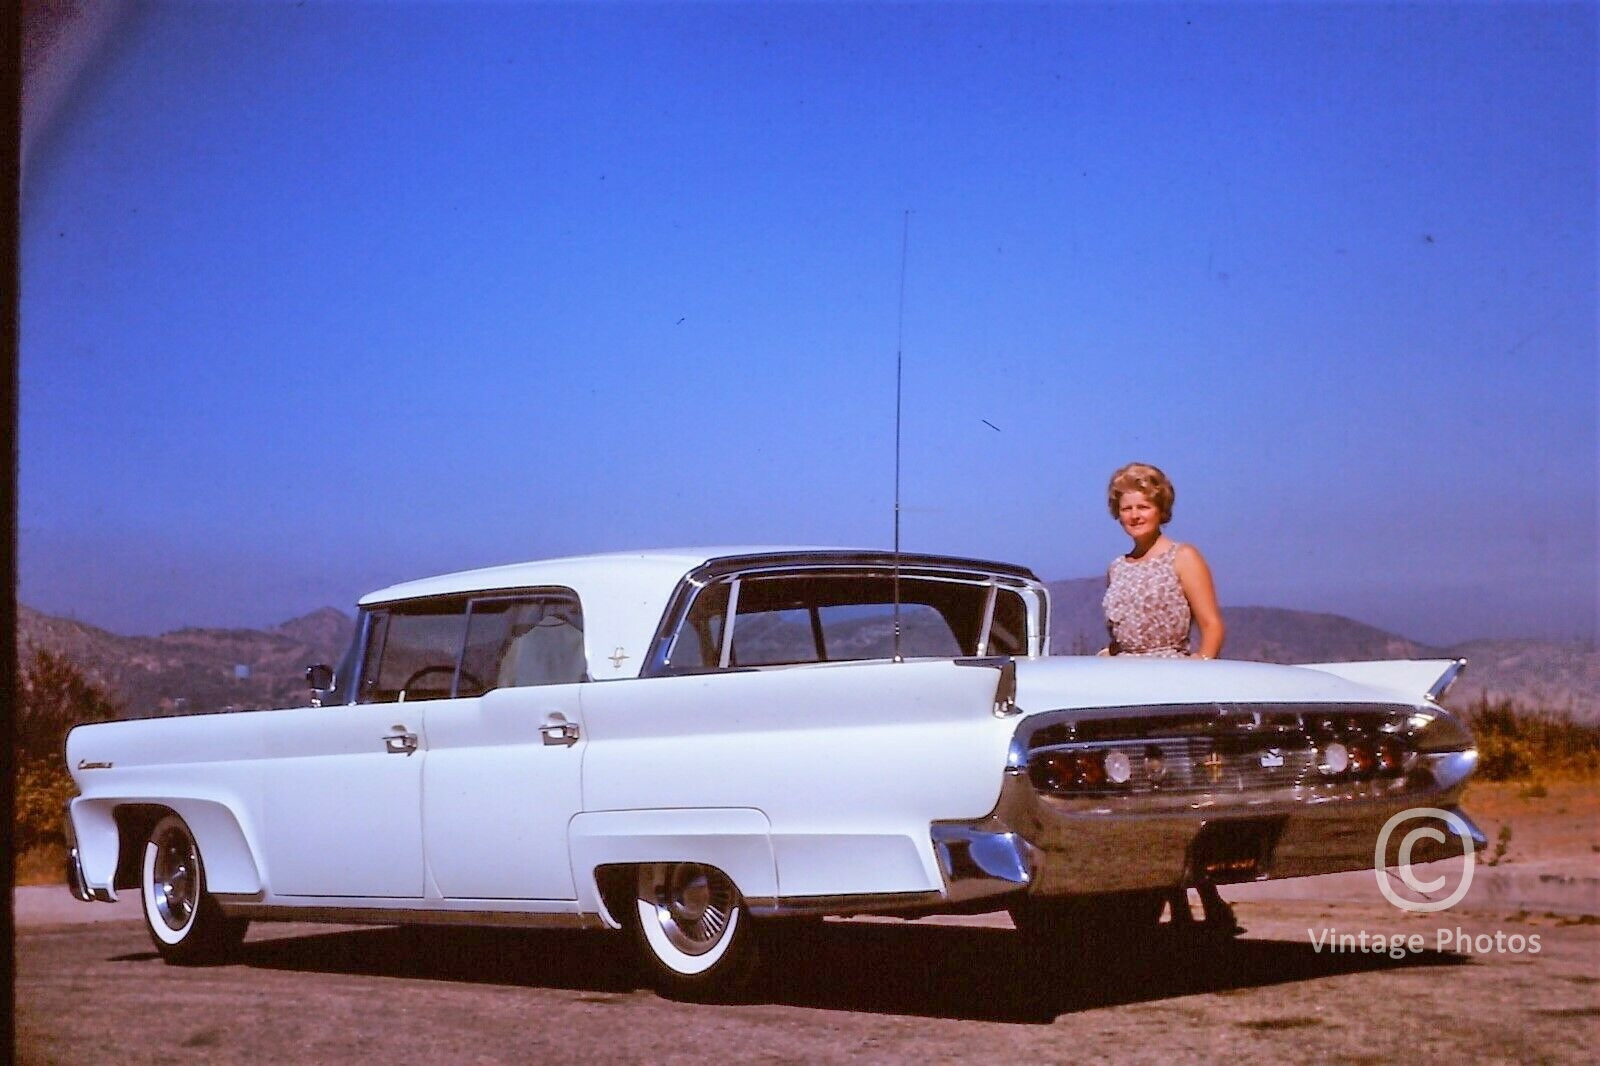 1963 Classic White American Car & Lady